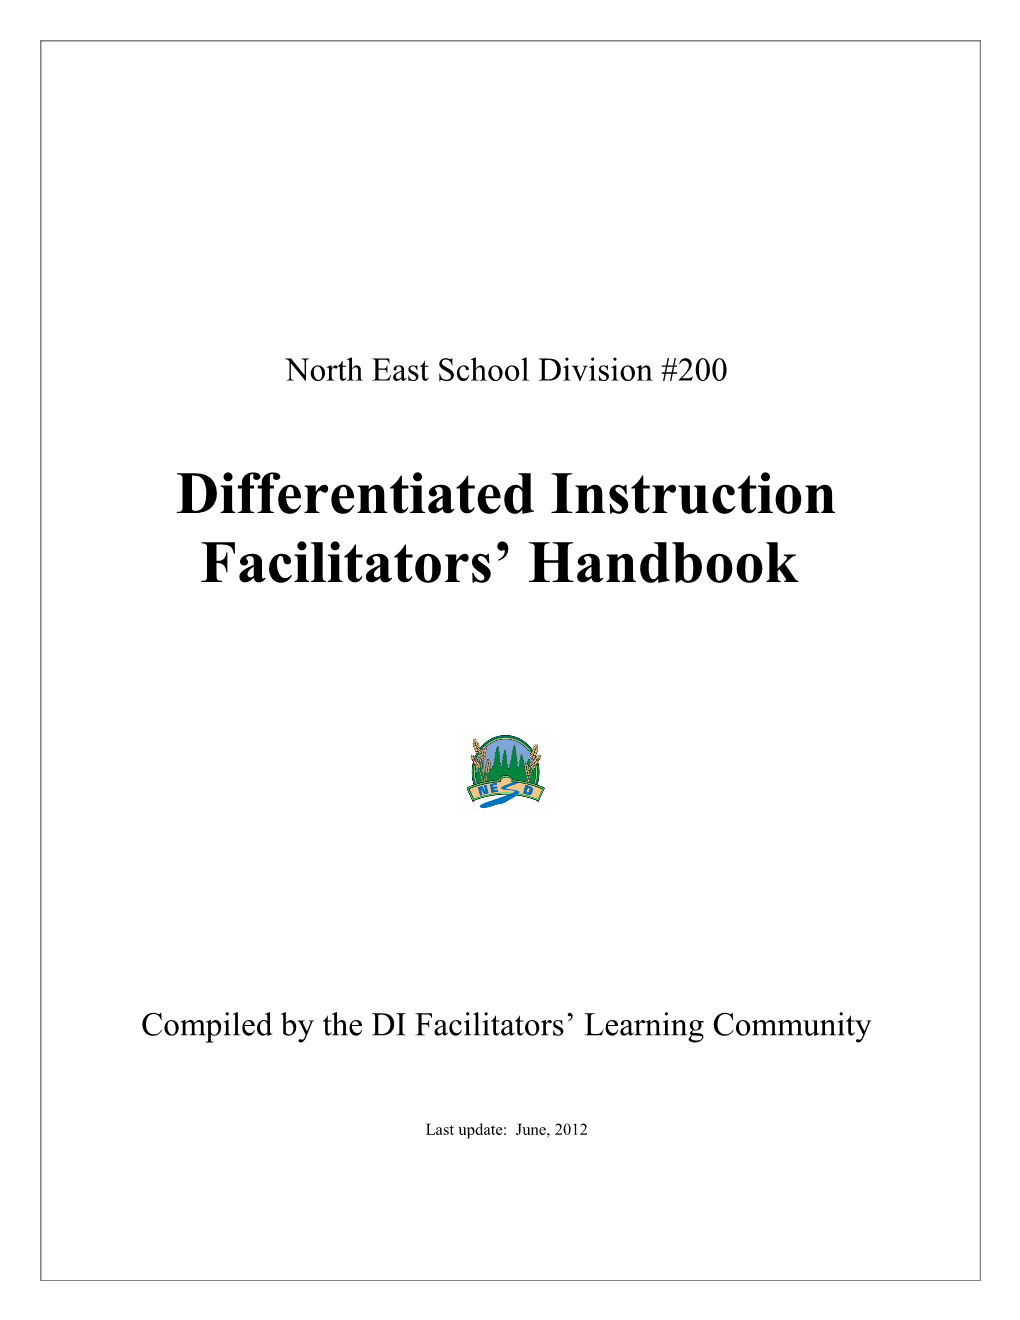 Differentiated Instruction Facilitators Handbook